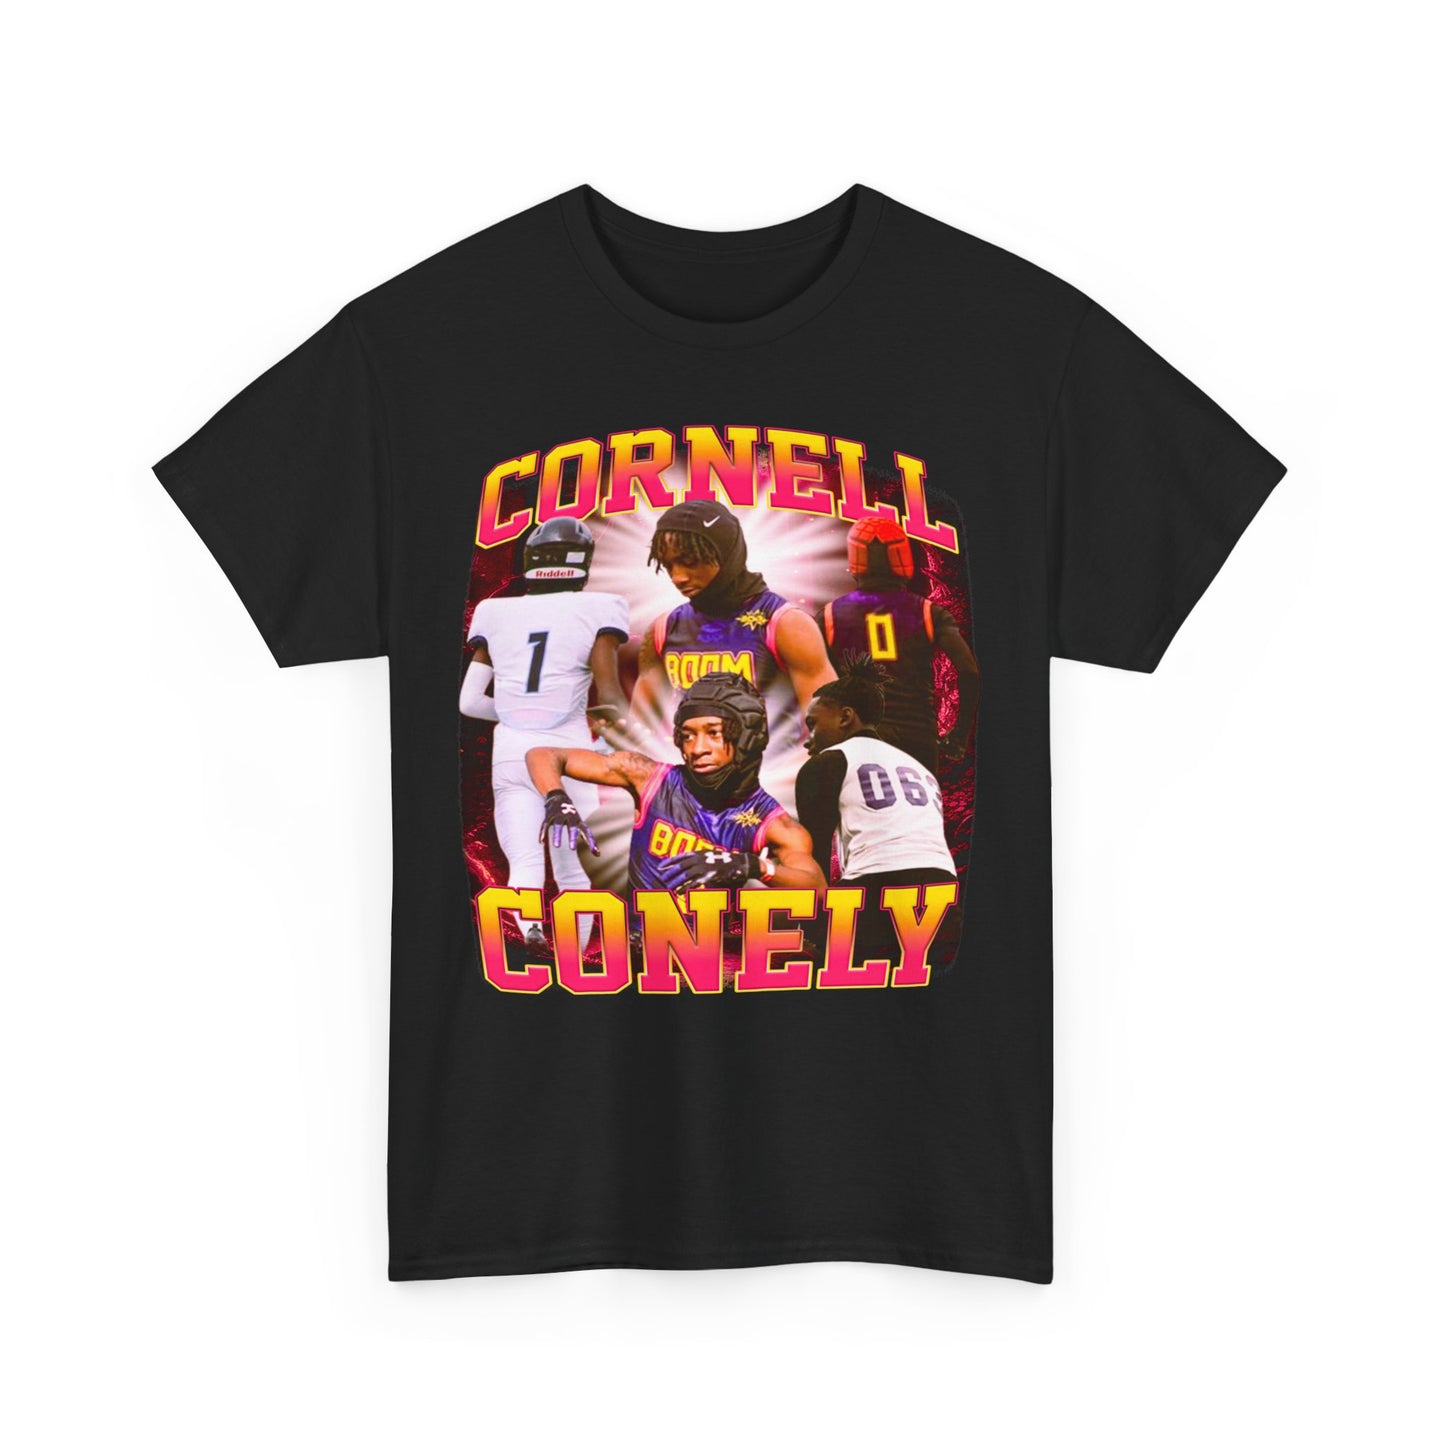 Cornell Conely Heavy Cotton Tee